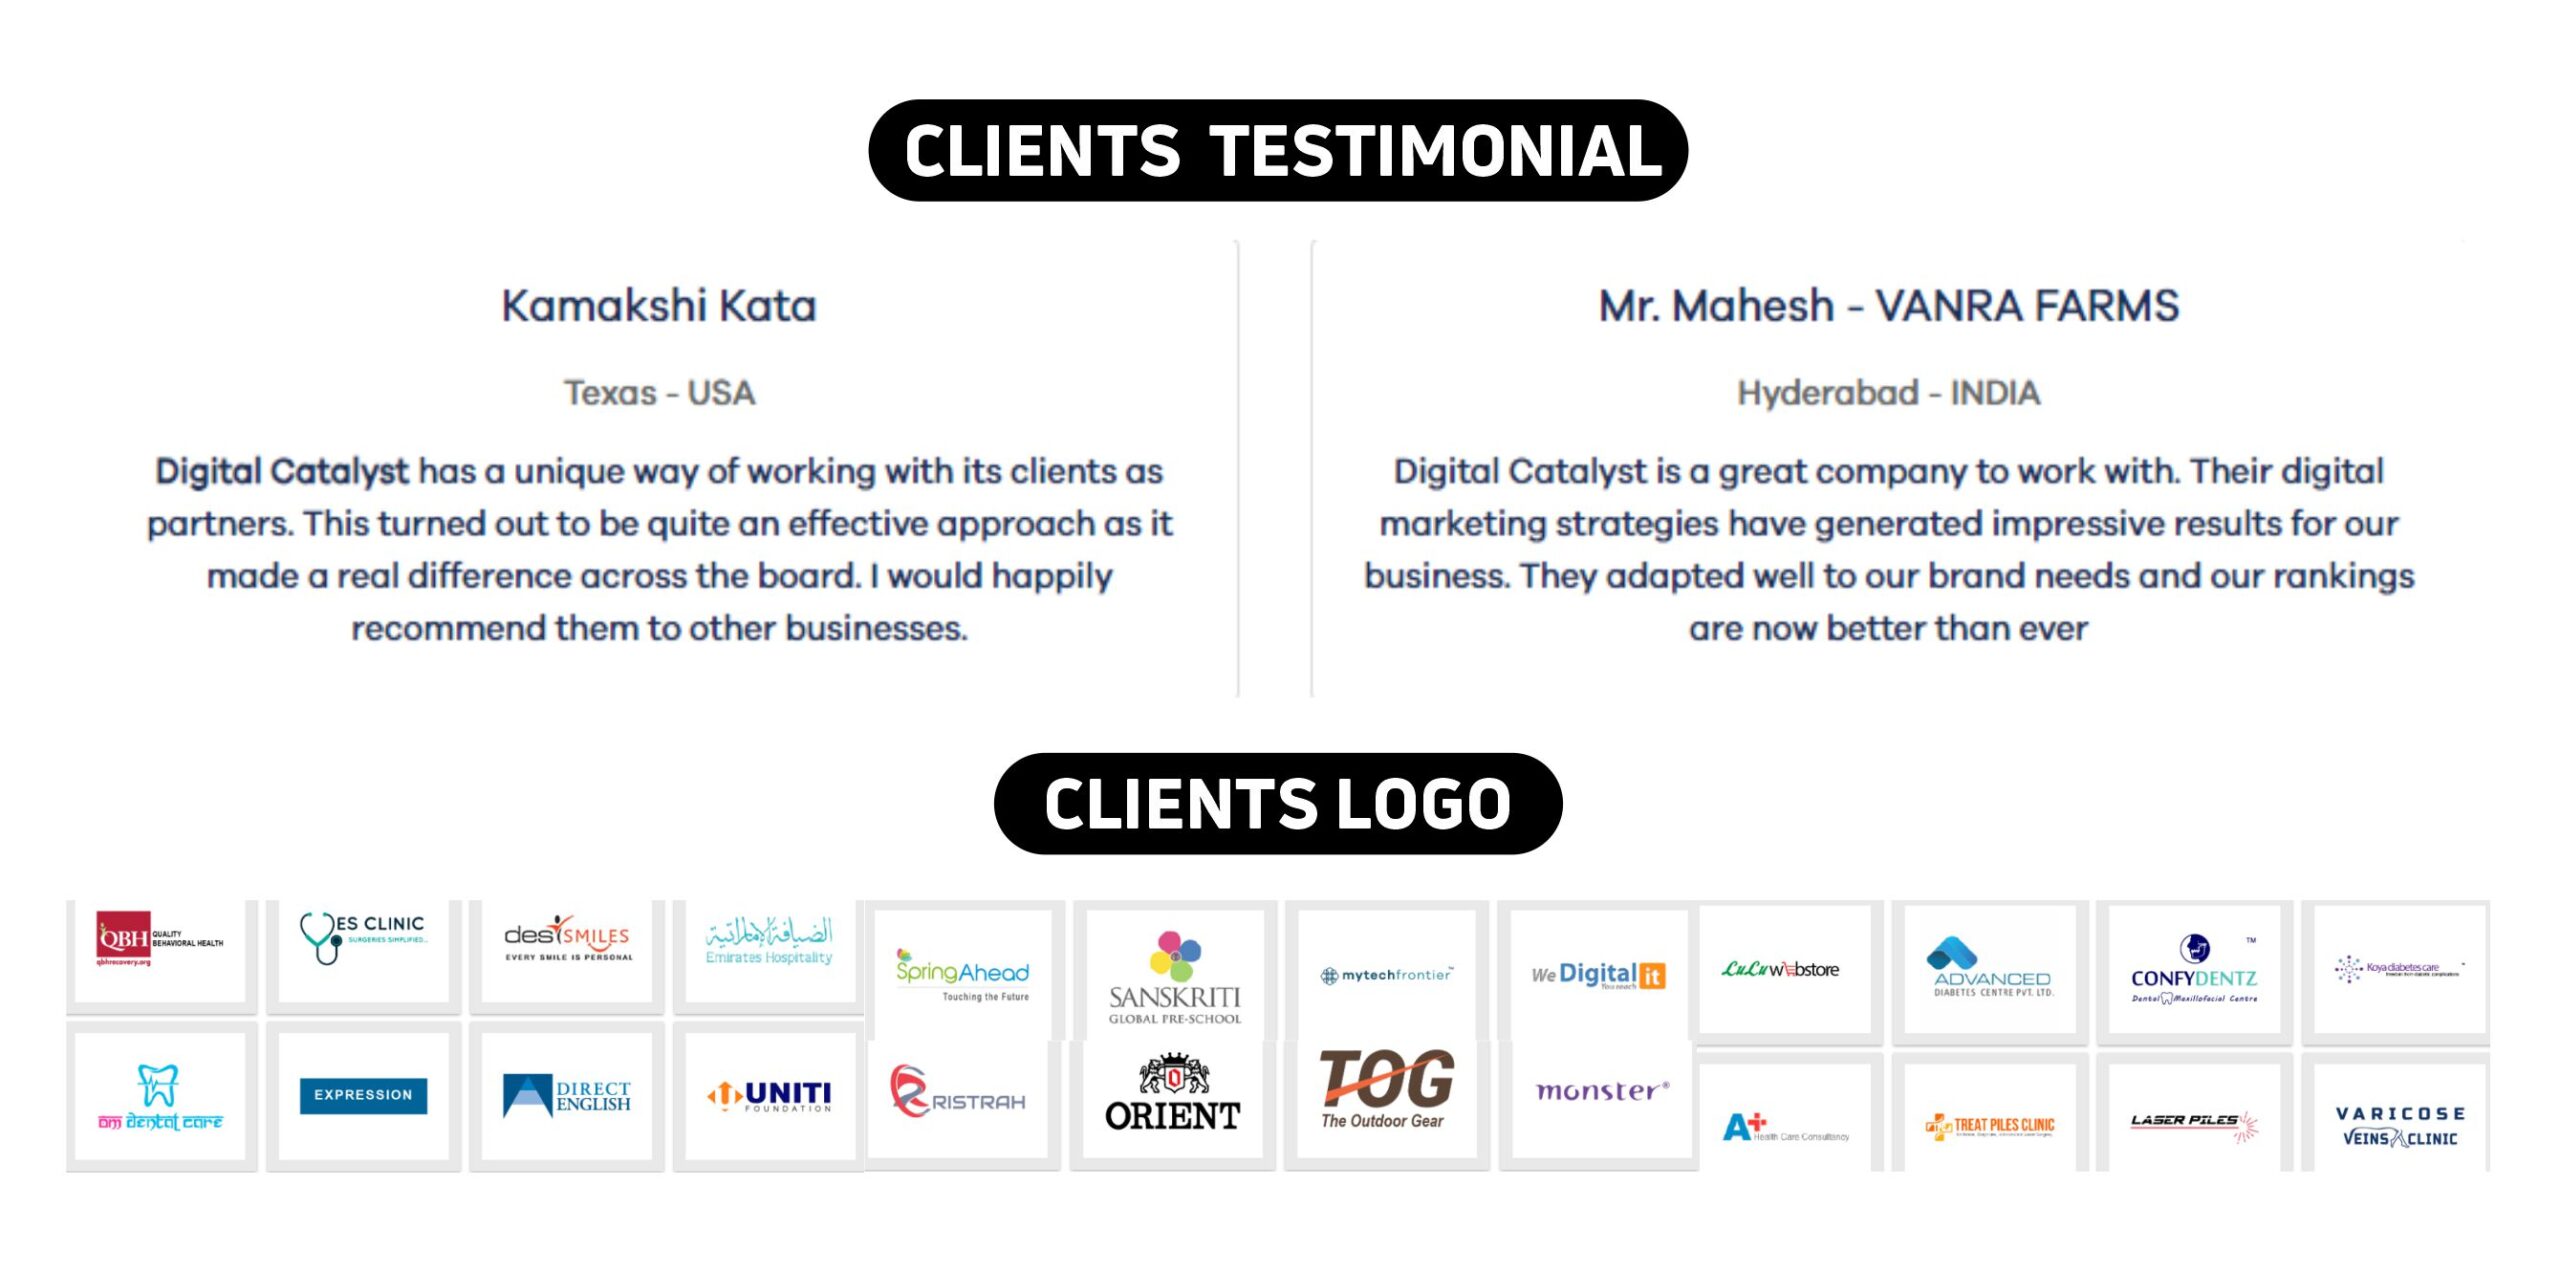 Digital Catalyst Clients Testimonials & Logos